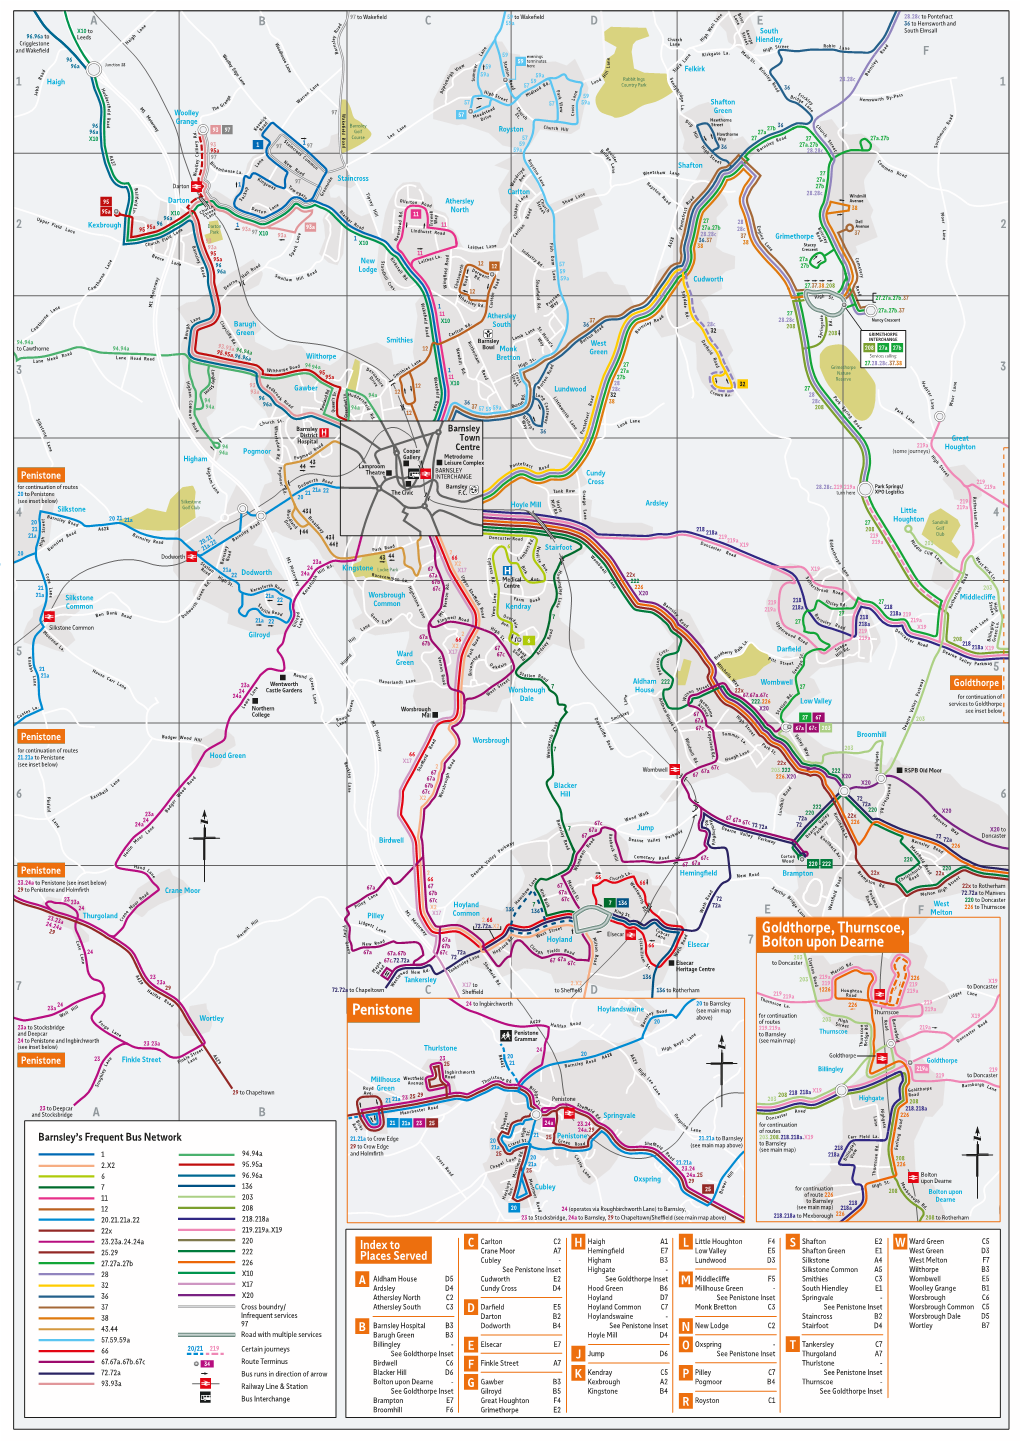 Barnsley Partnership Network Map V4